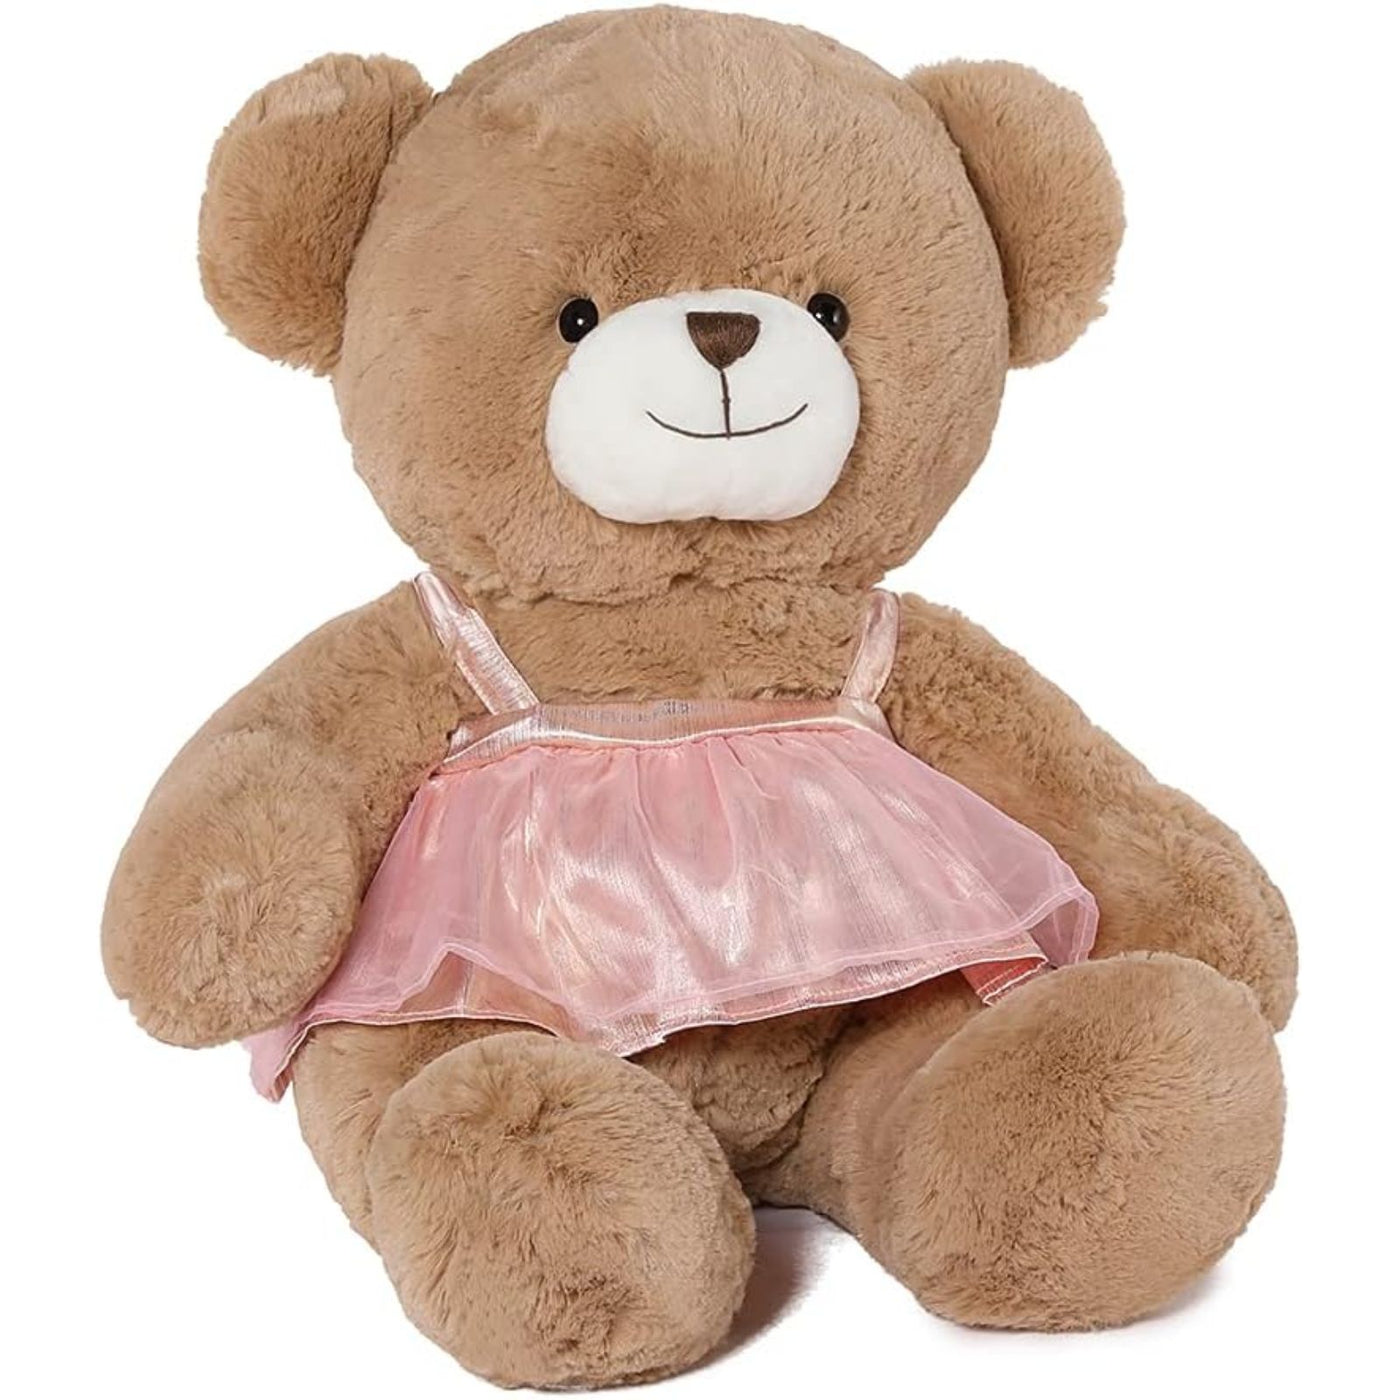 Teddy Bear Stuffed Toy, Beige/Brown, 17.5 Inches